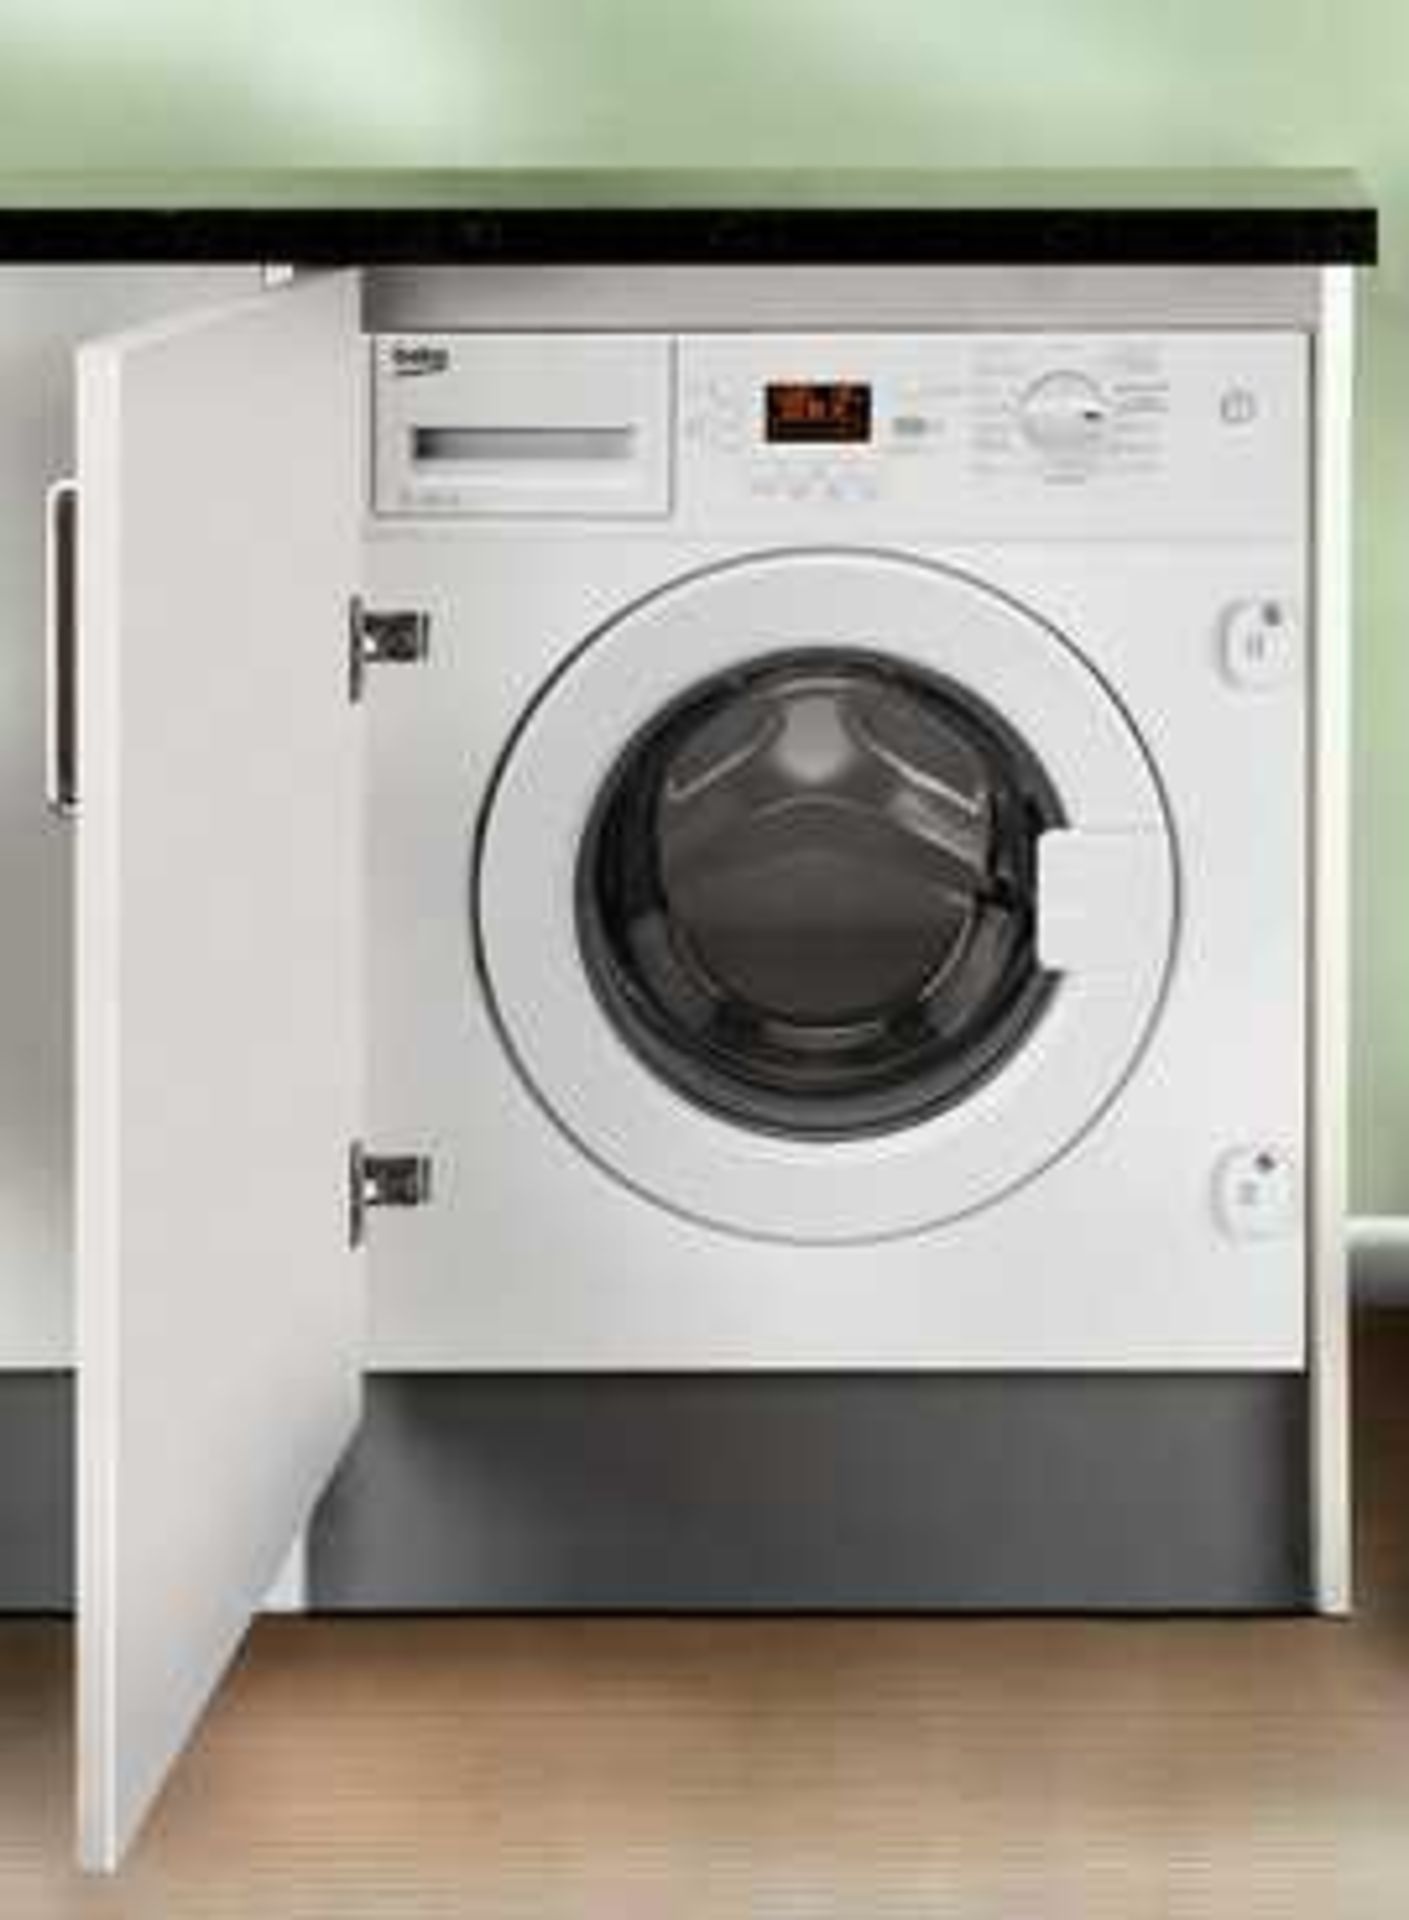 (JM) RRP £380 Lot To Contain 1 x Beko Integrated 7kg Washing Machine model WMI71641